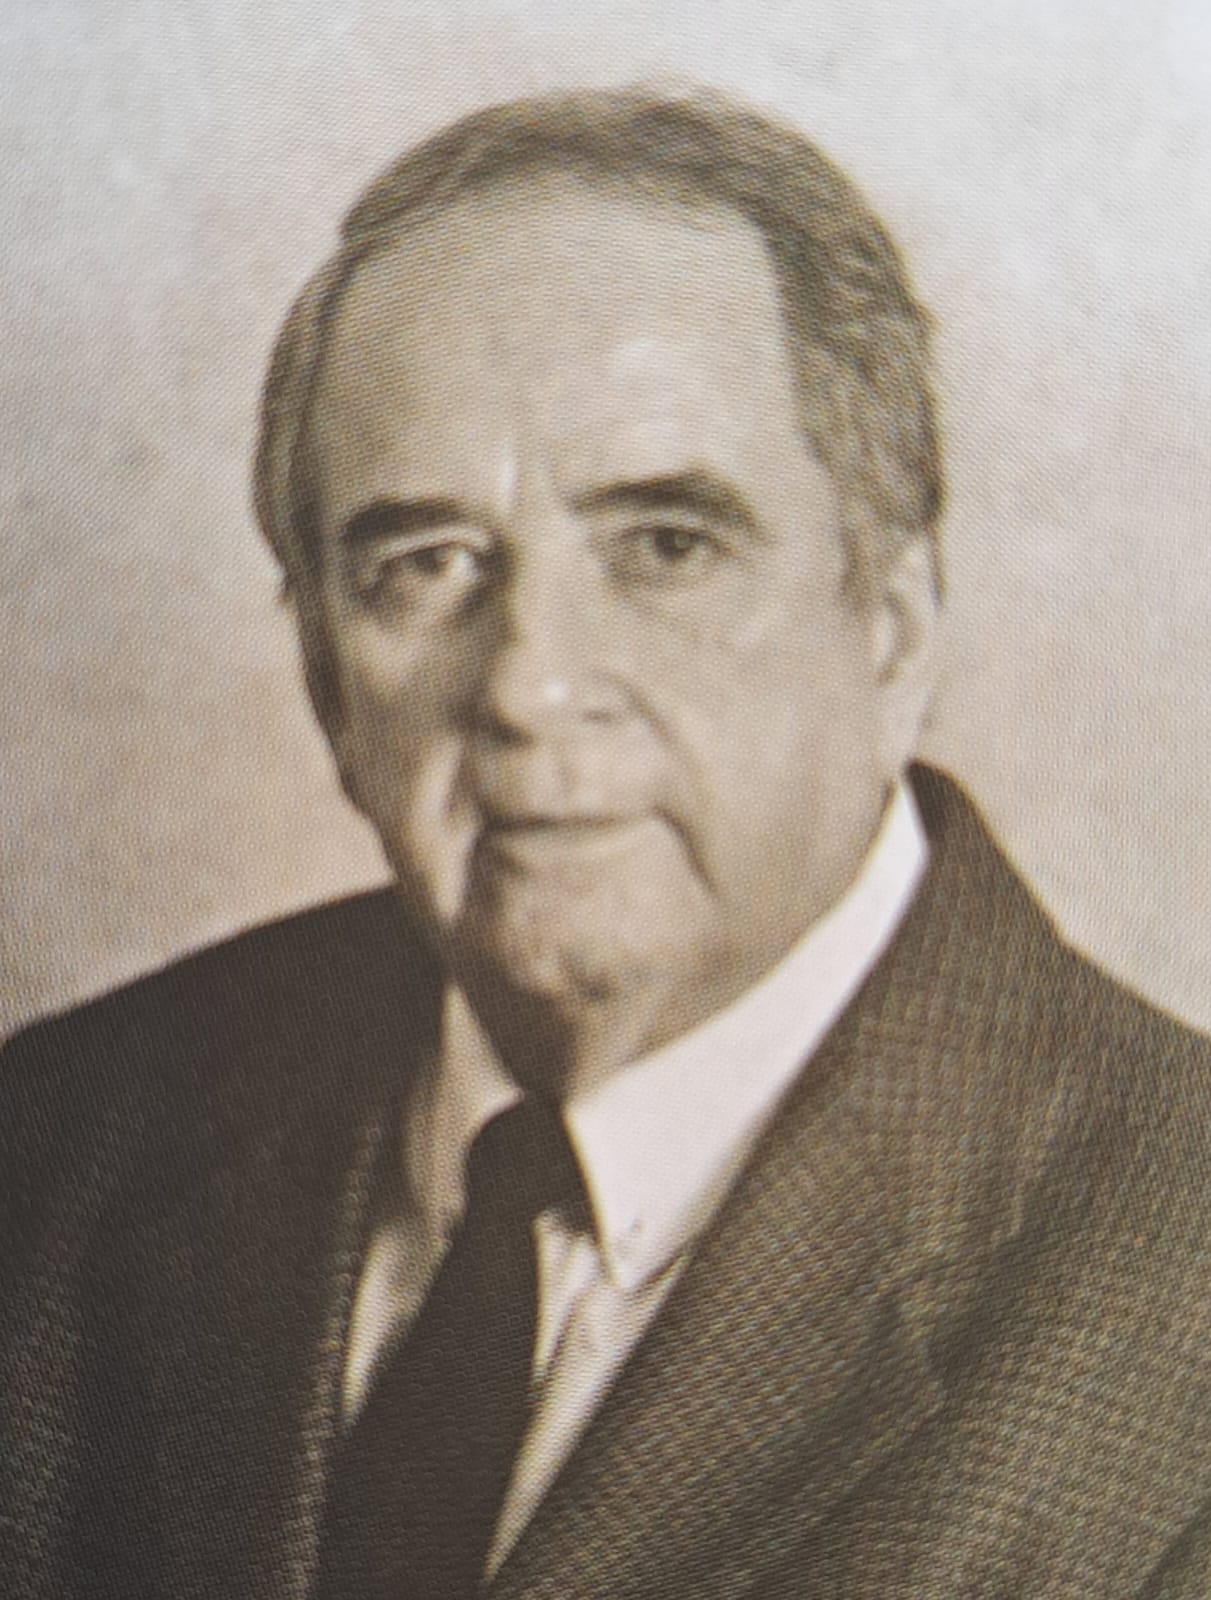 José Helvesley Alves